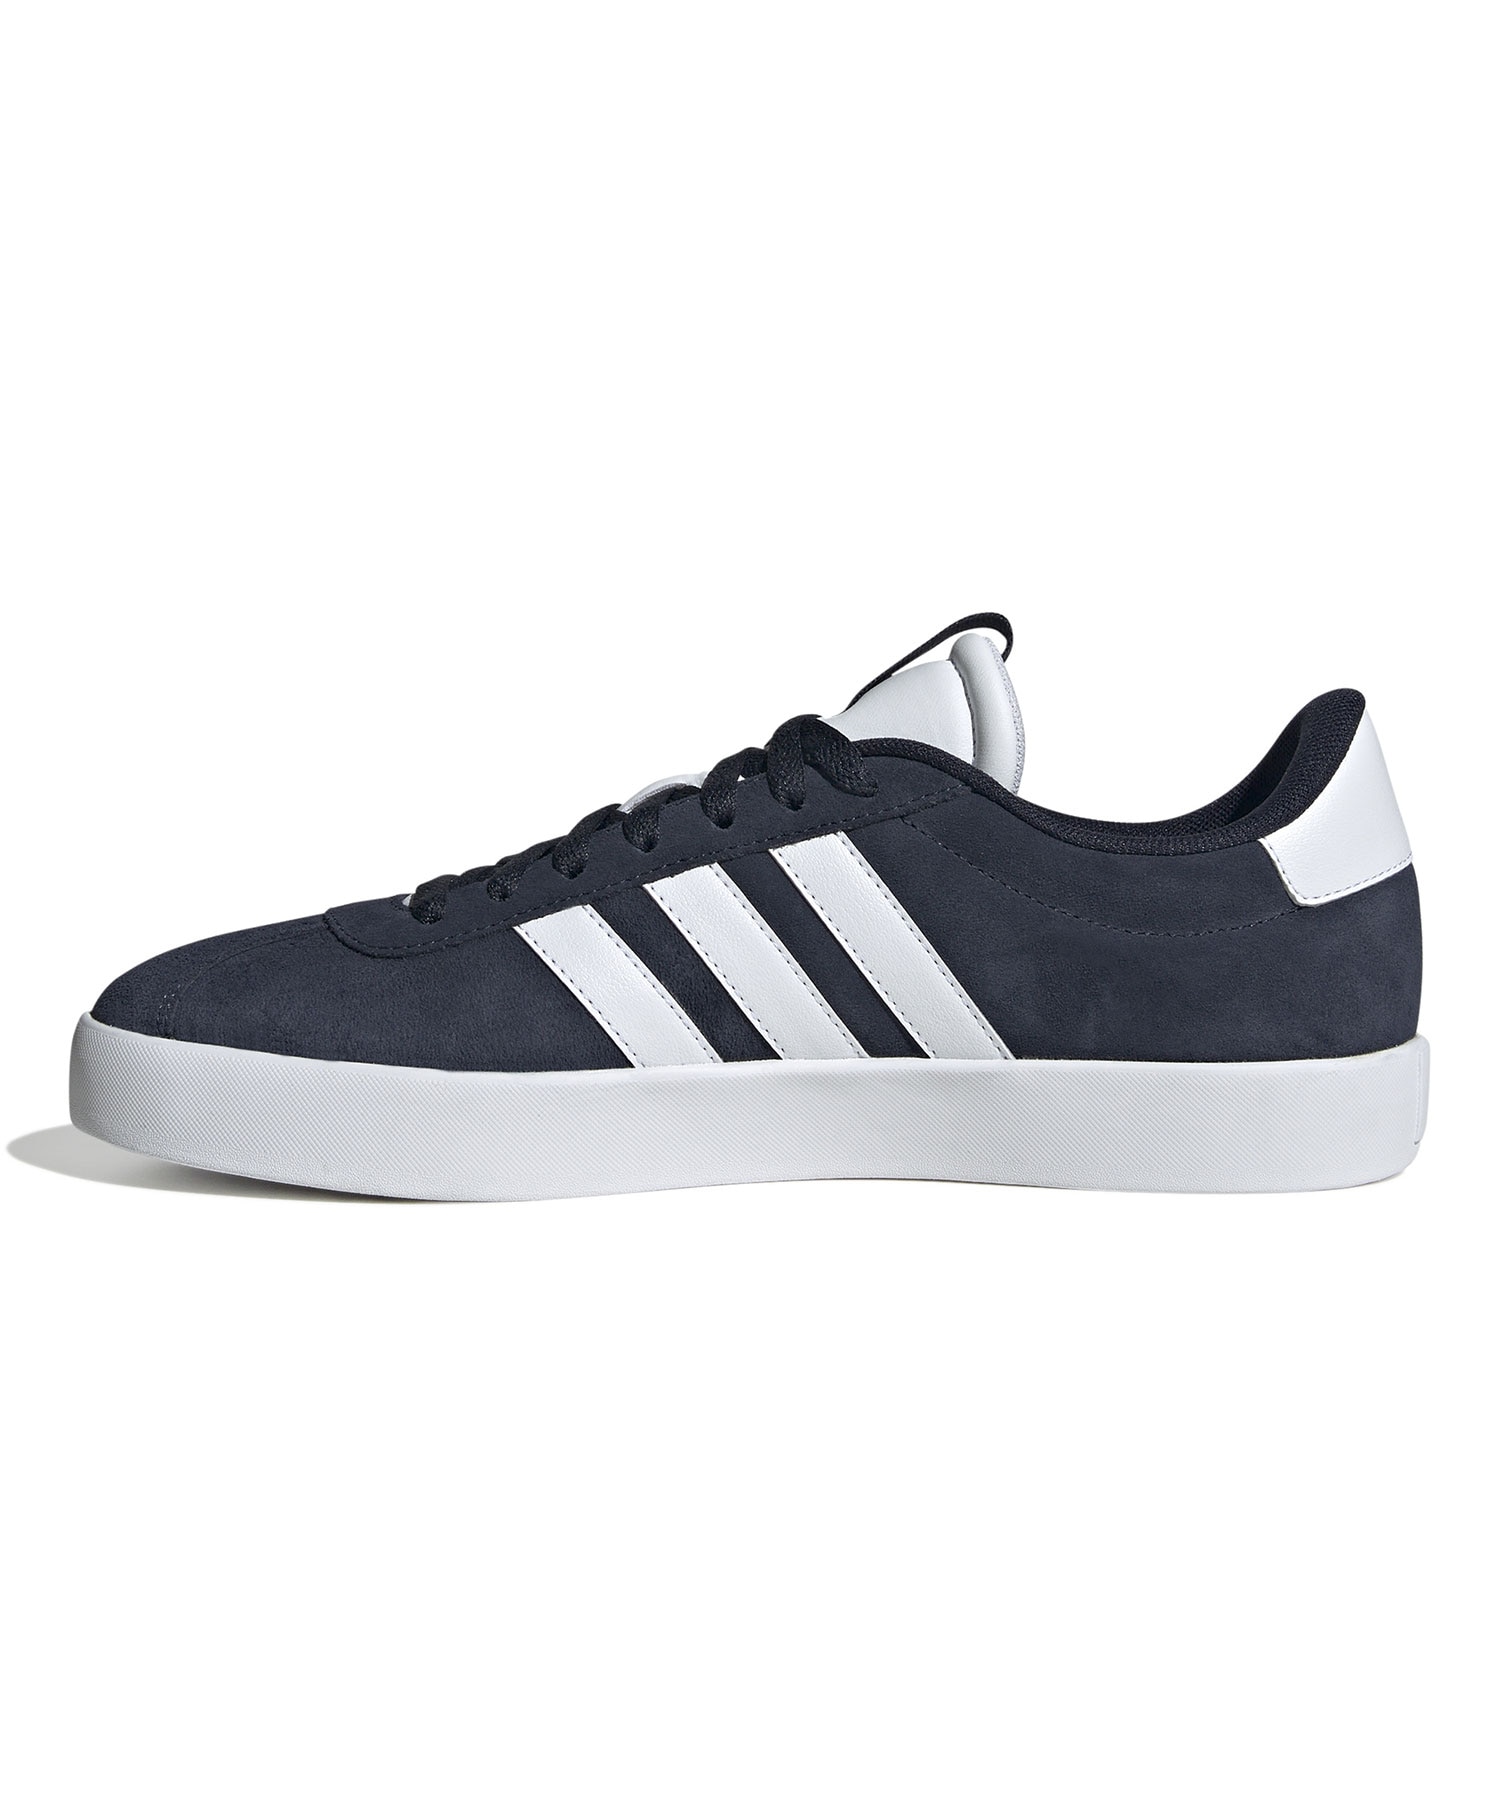 Adidas VL Court 3.0